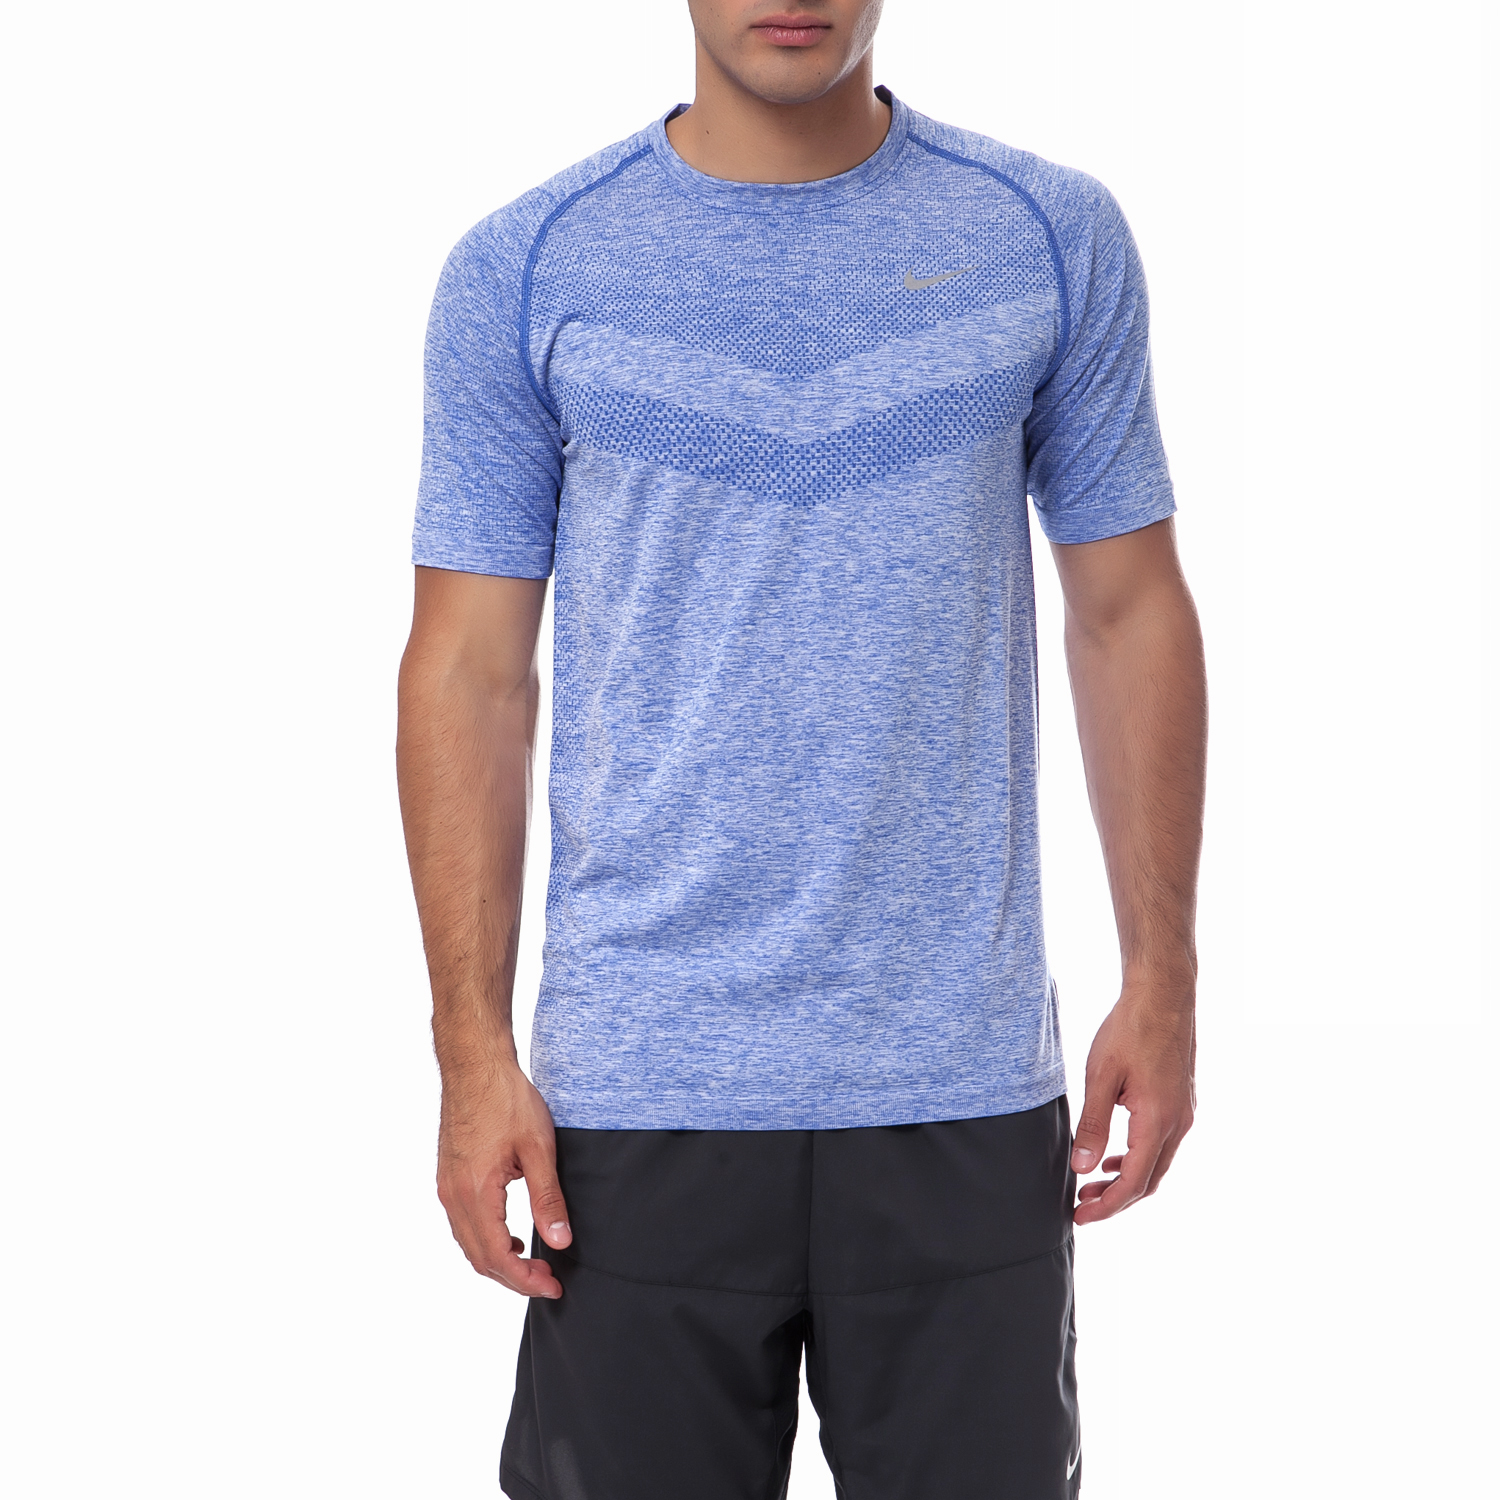 NIKE - Ανδρική μπλούζα Nike μπλε Ανδρικά/Ρούχα/Αθλητικά/T-shirt